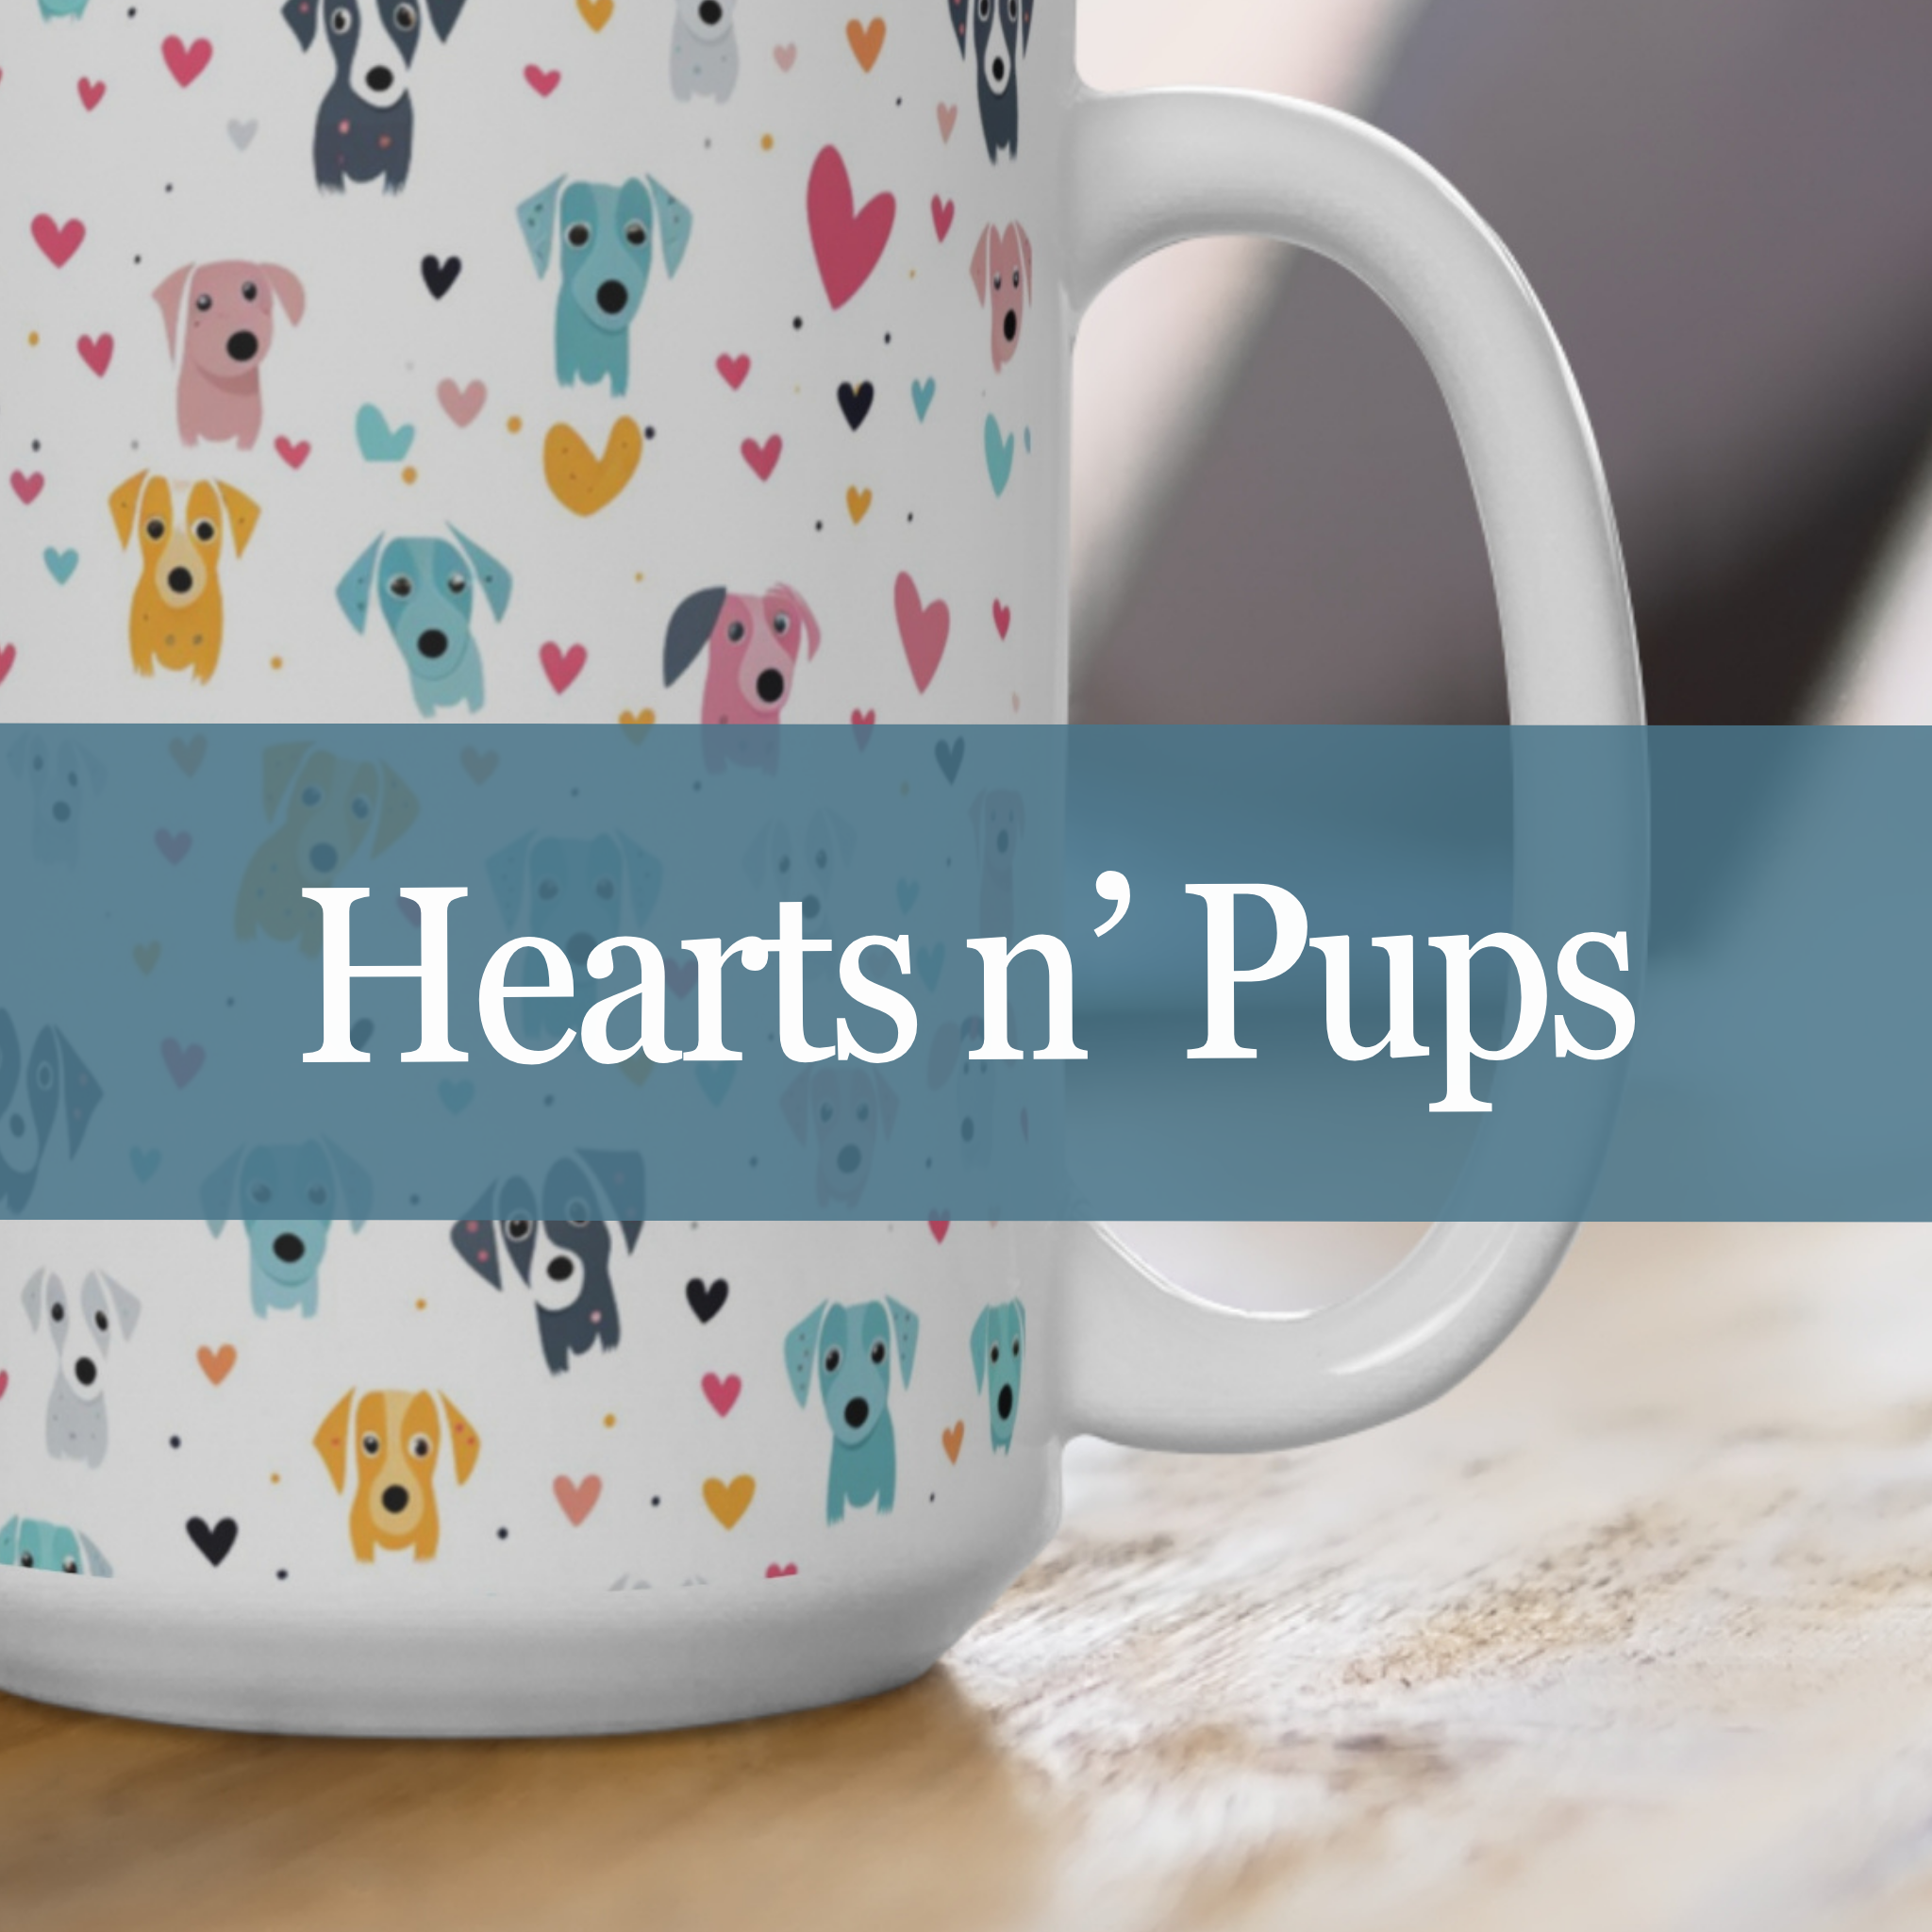 Hearts n' Pups